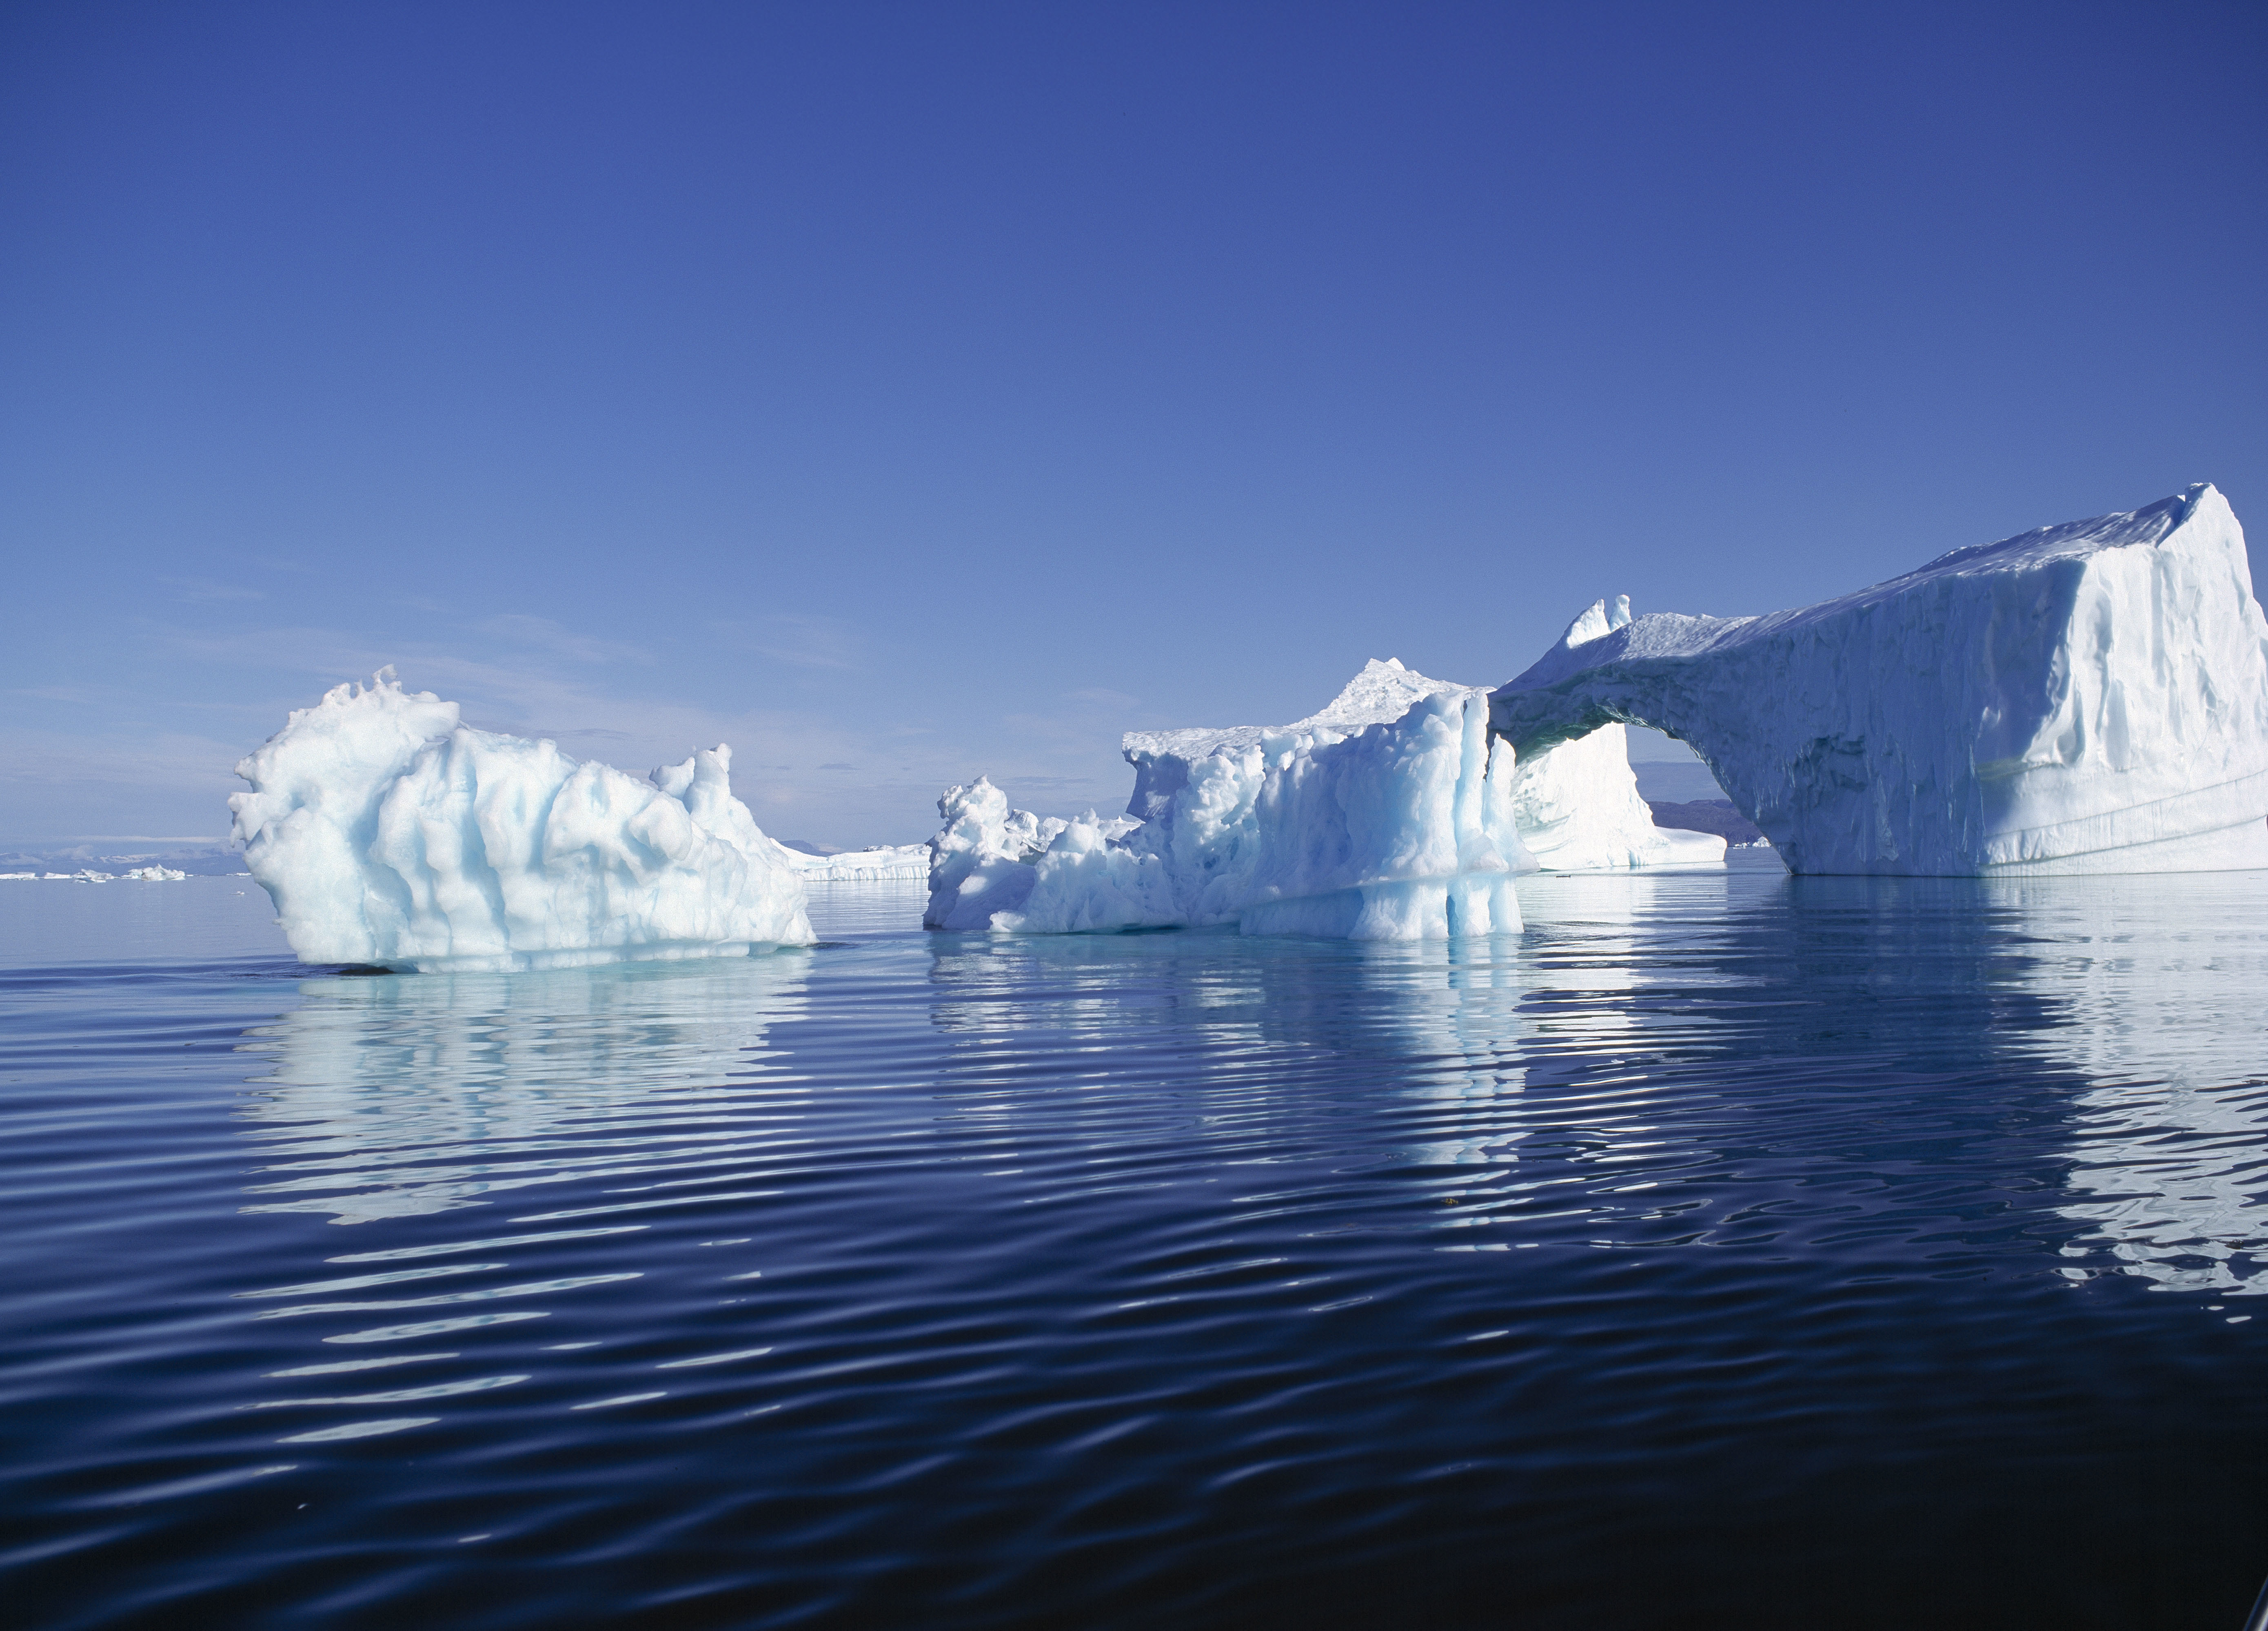 Лед 2 океан. Ледяной каньон Гренландия. Арктика Северный Ледовитый океан. Ледяной Покров Северного Ледовитого океана. Льды Арктики северооедовитого океана.